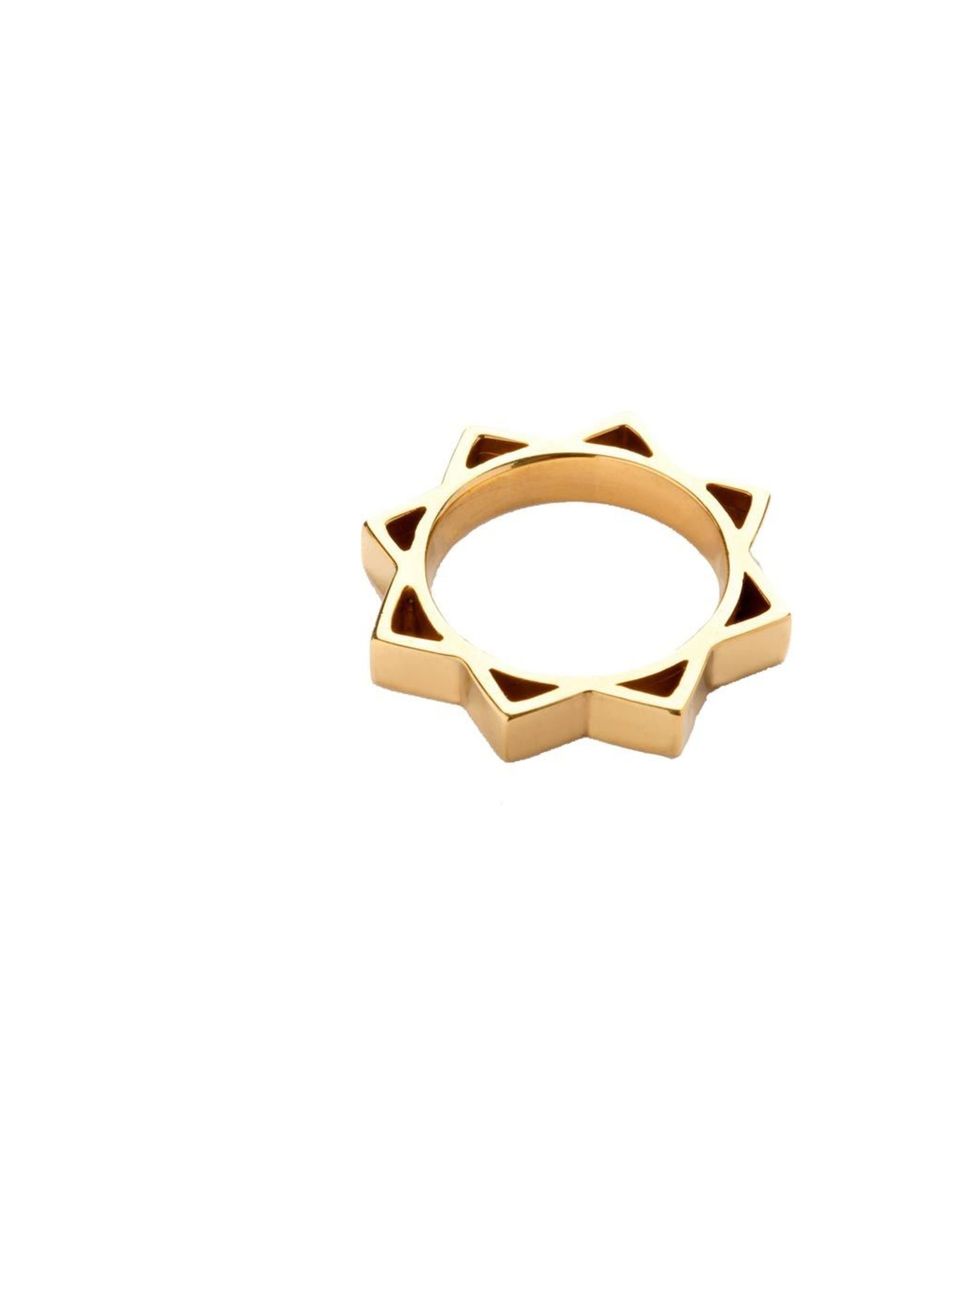 <p>Henriette Lofstrom star ring, £136, at <a href="http://www.kabiri.co.uk/tiny-star-yellow-gold-ring.html">Kabiri</a></p>